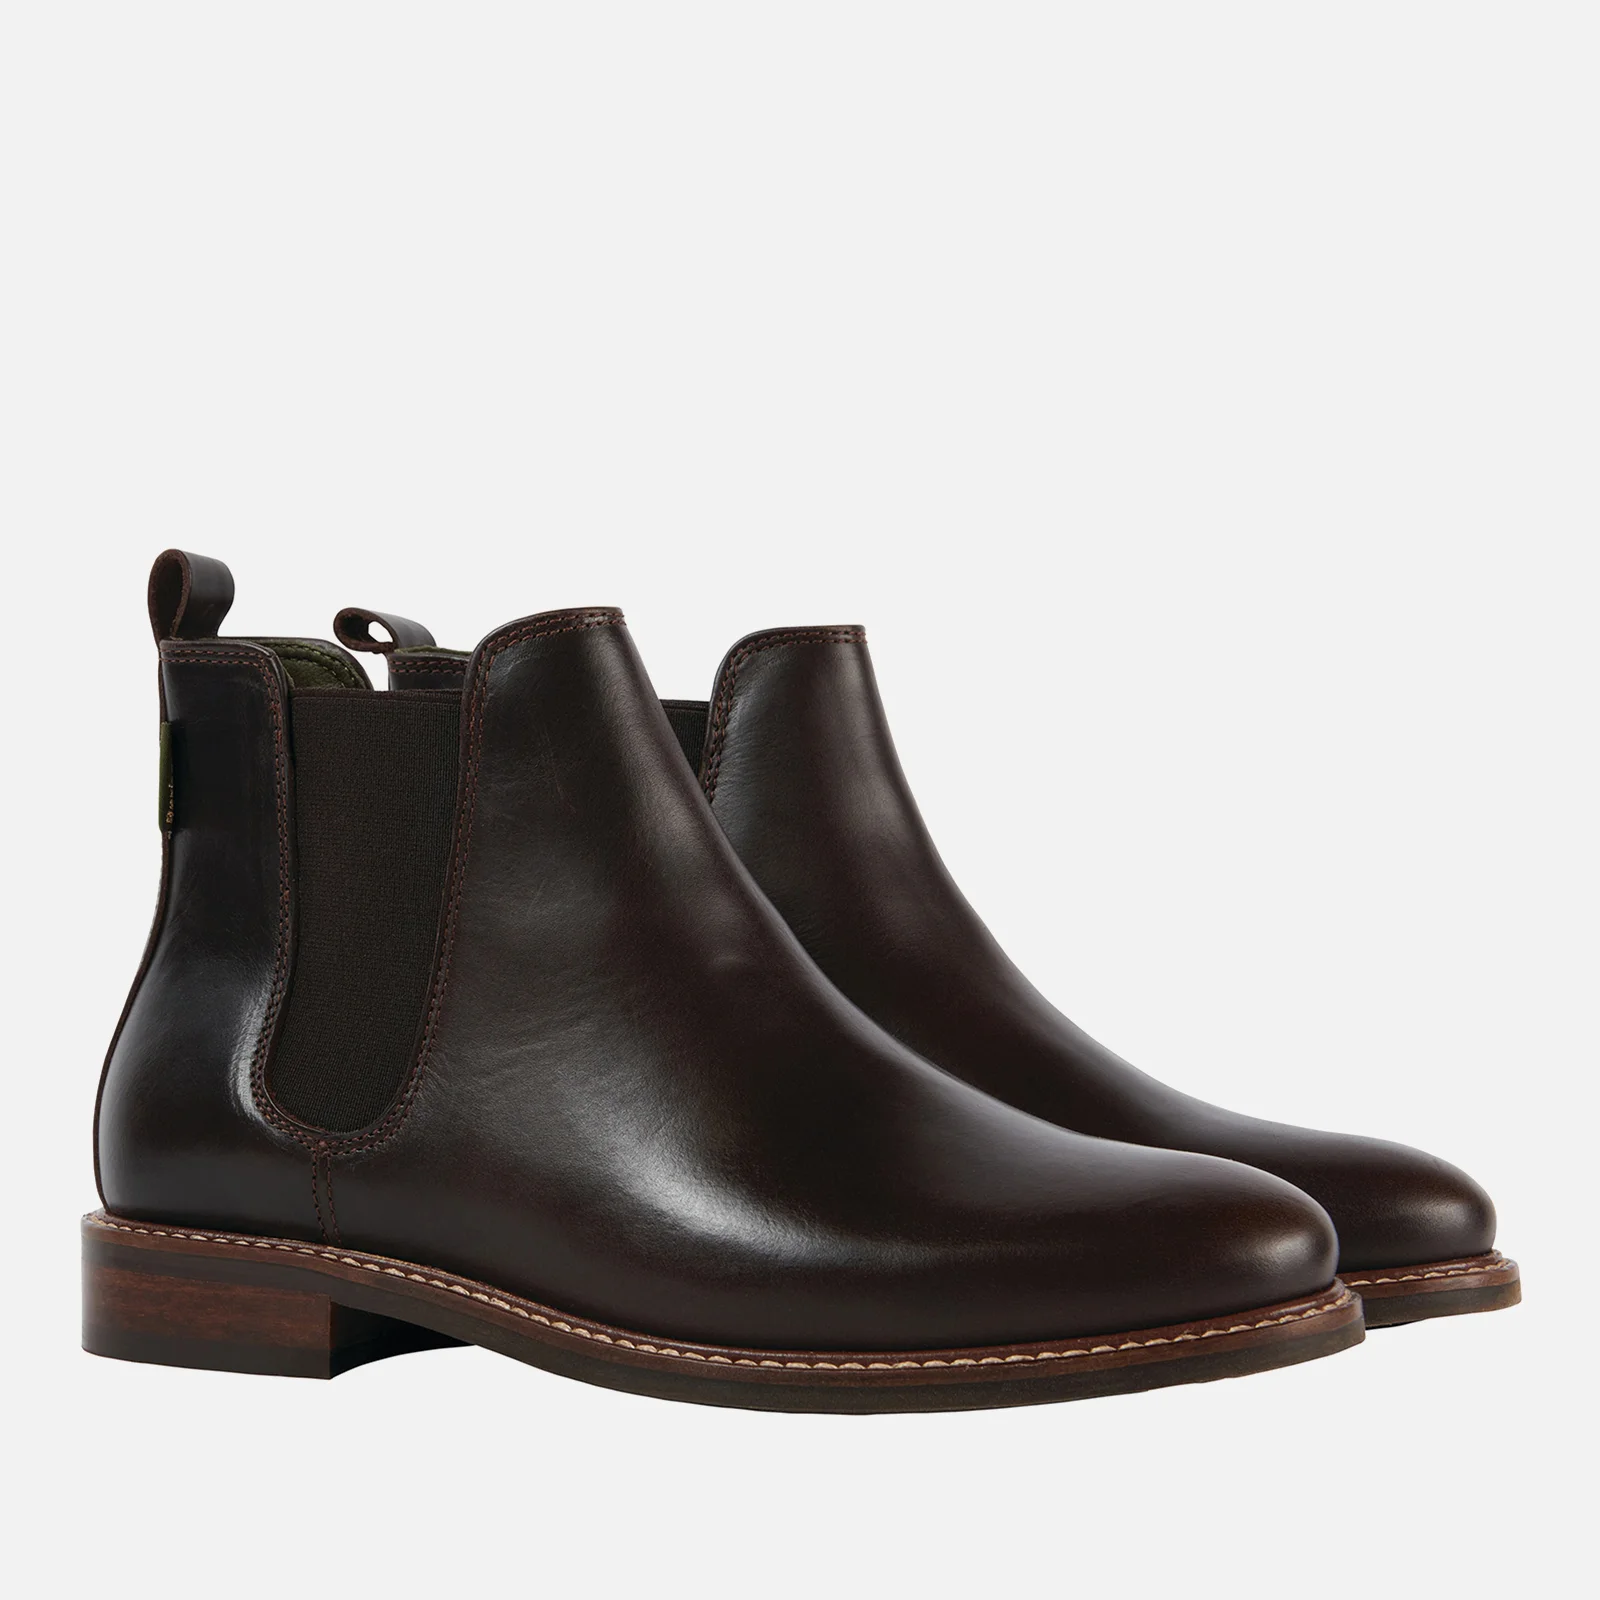 Barbour Foxton Leather Chelsea Boots | Allsole